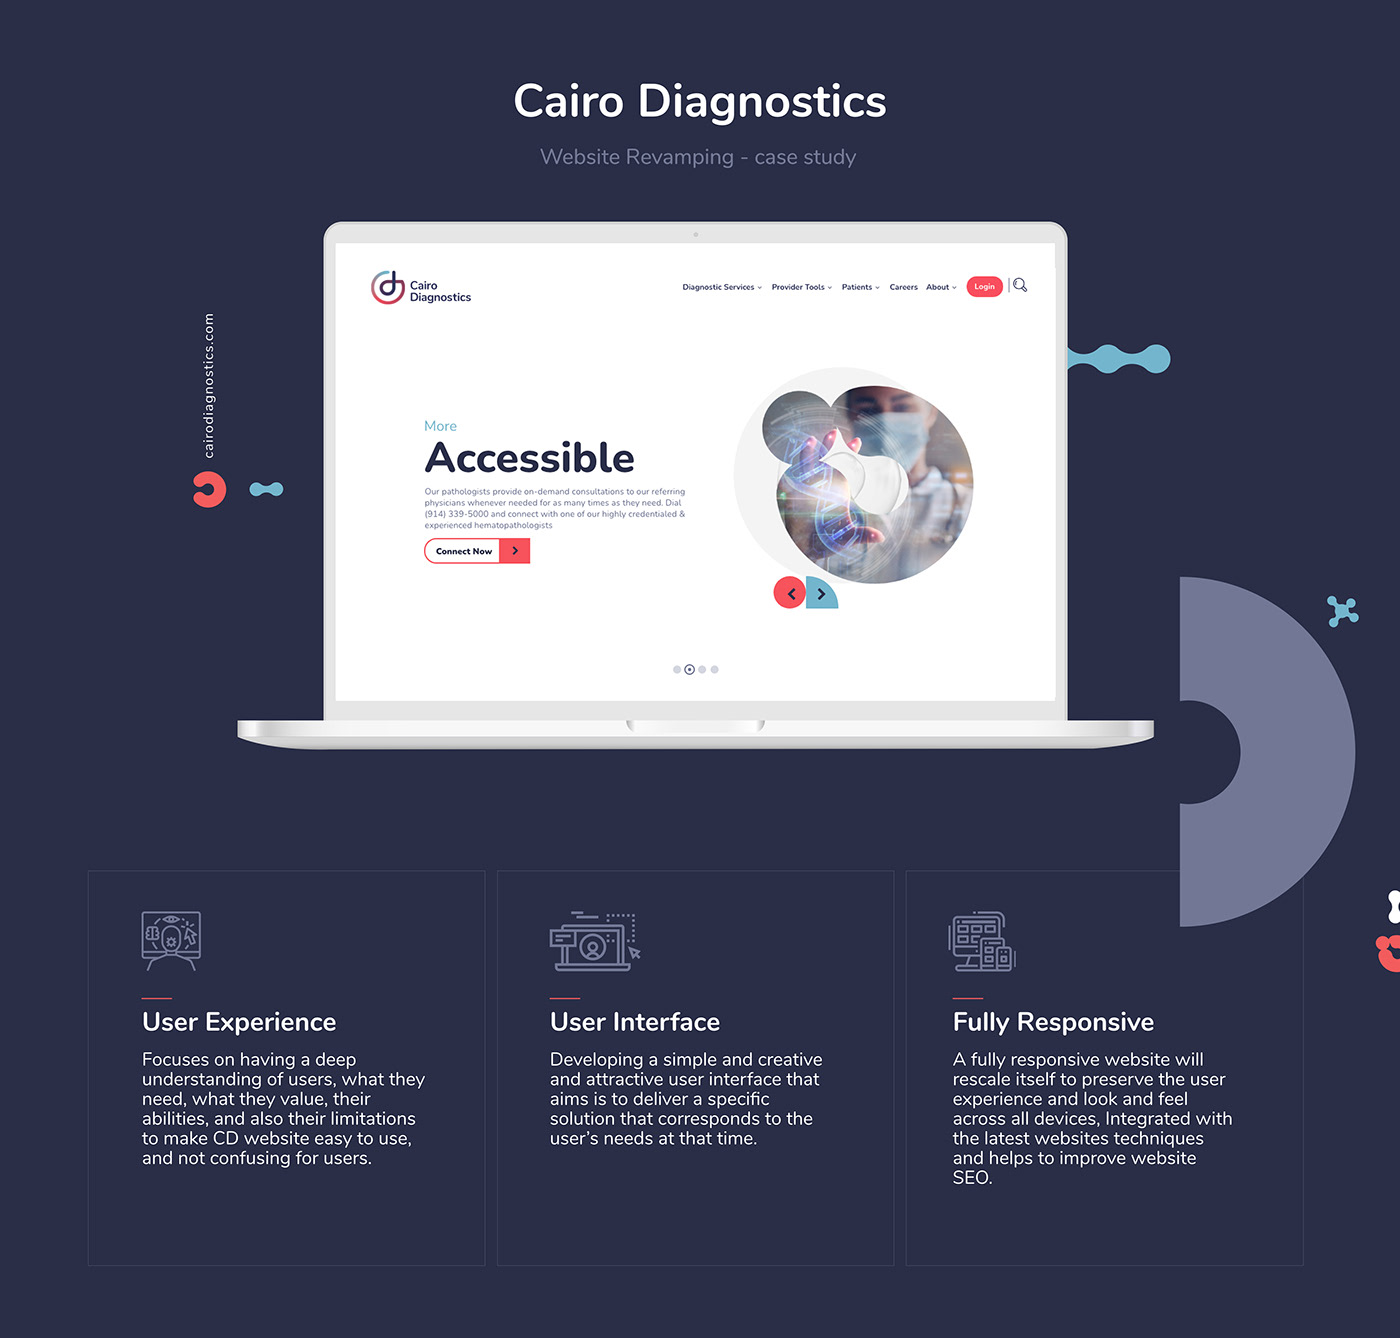 Cairo Diagnostics website revamping